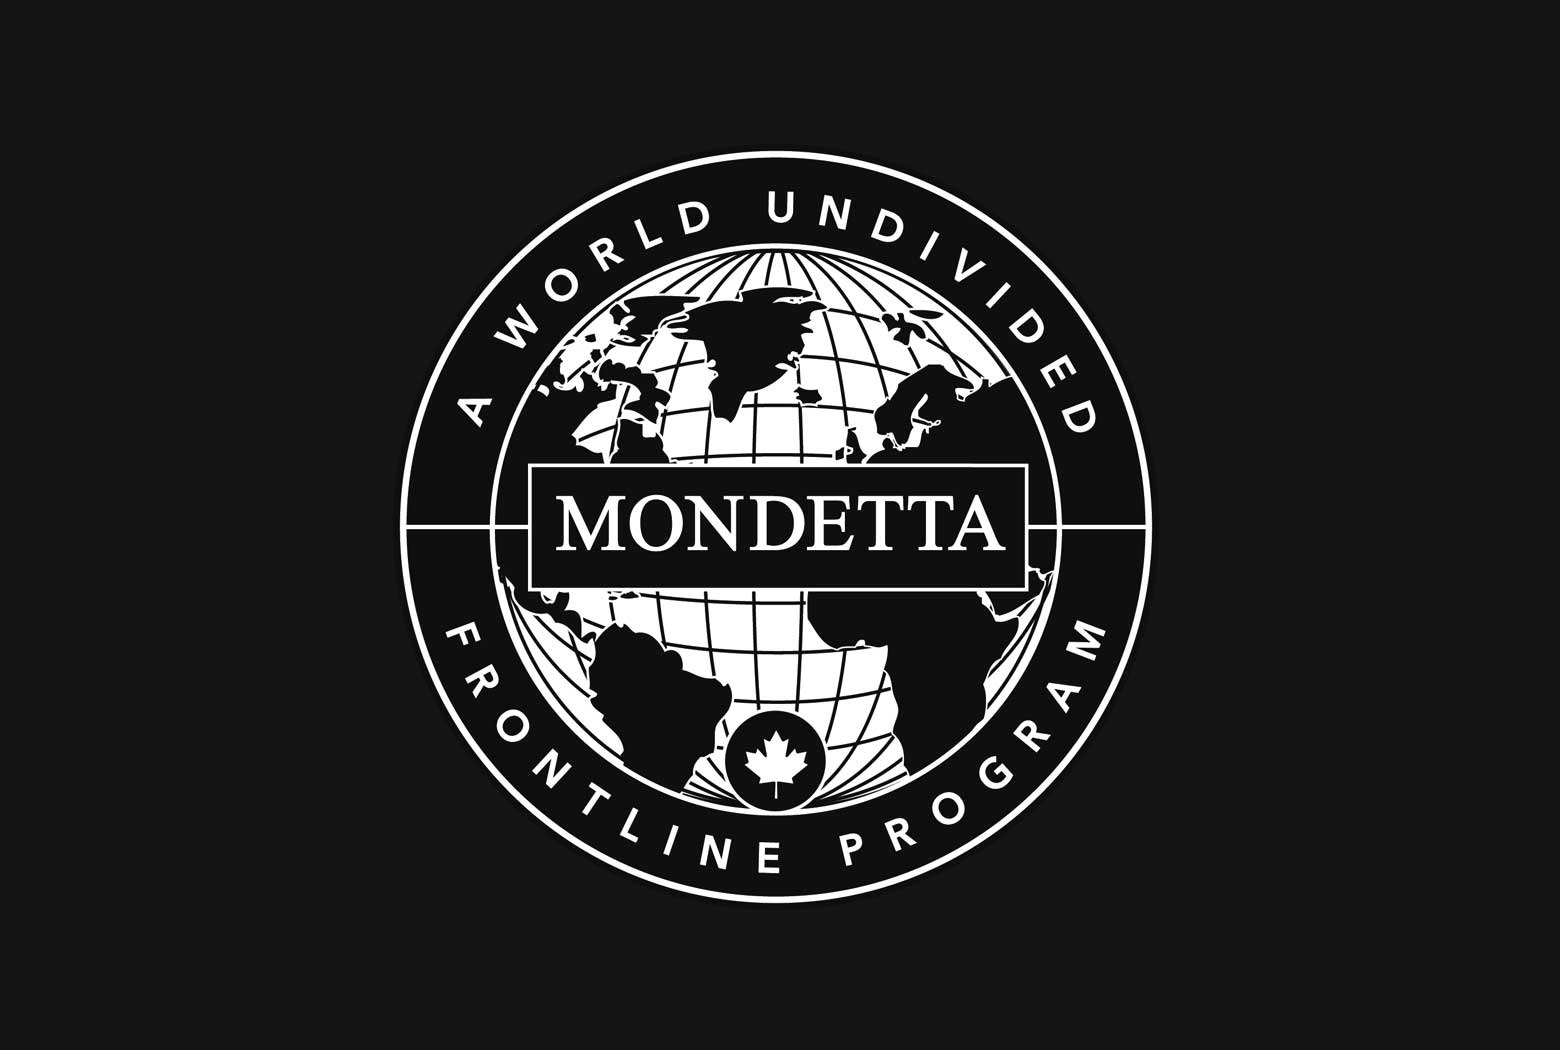 Mondetta Frontline Program